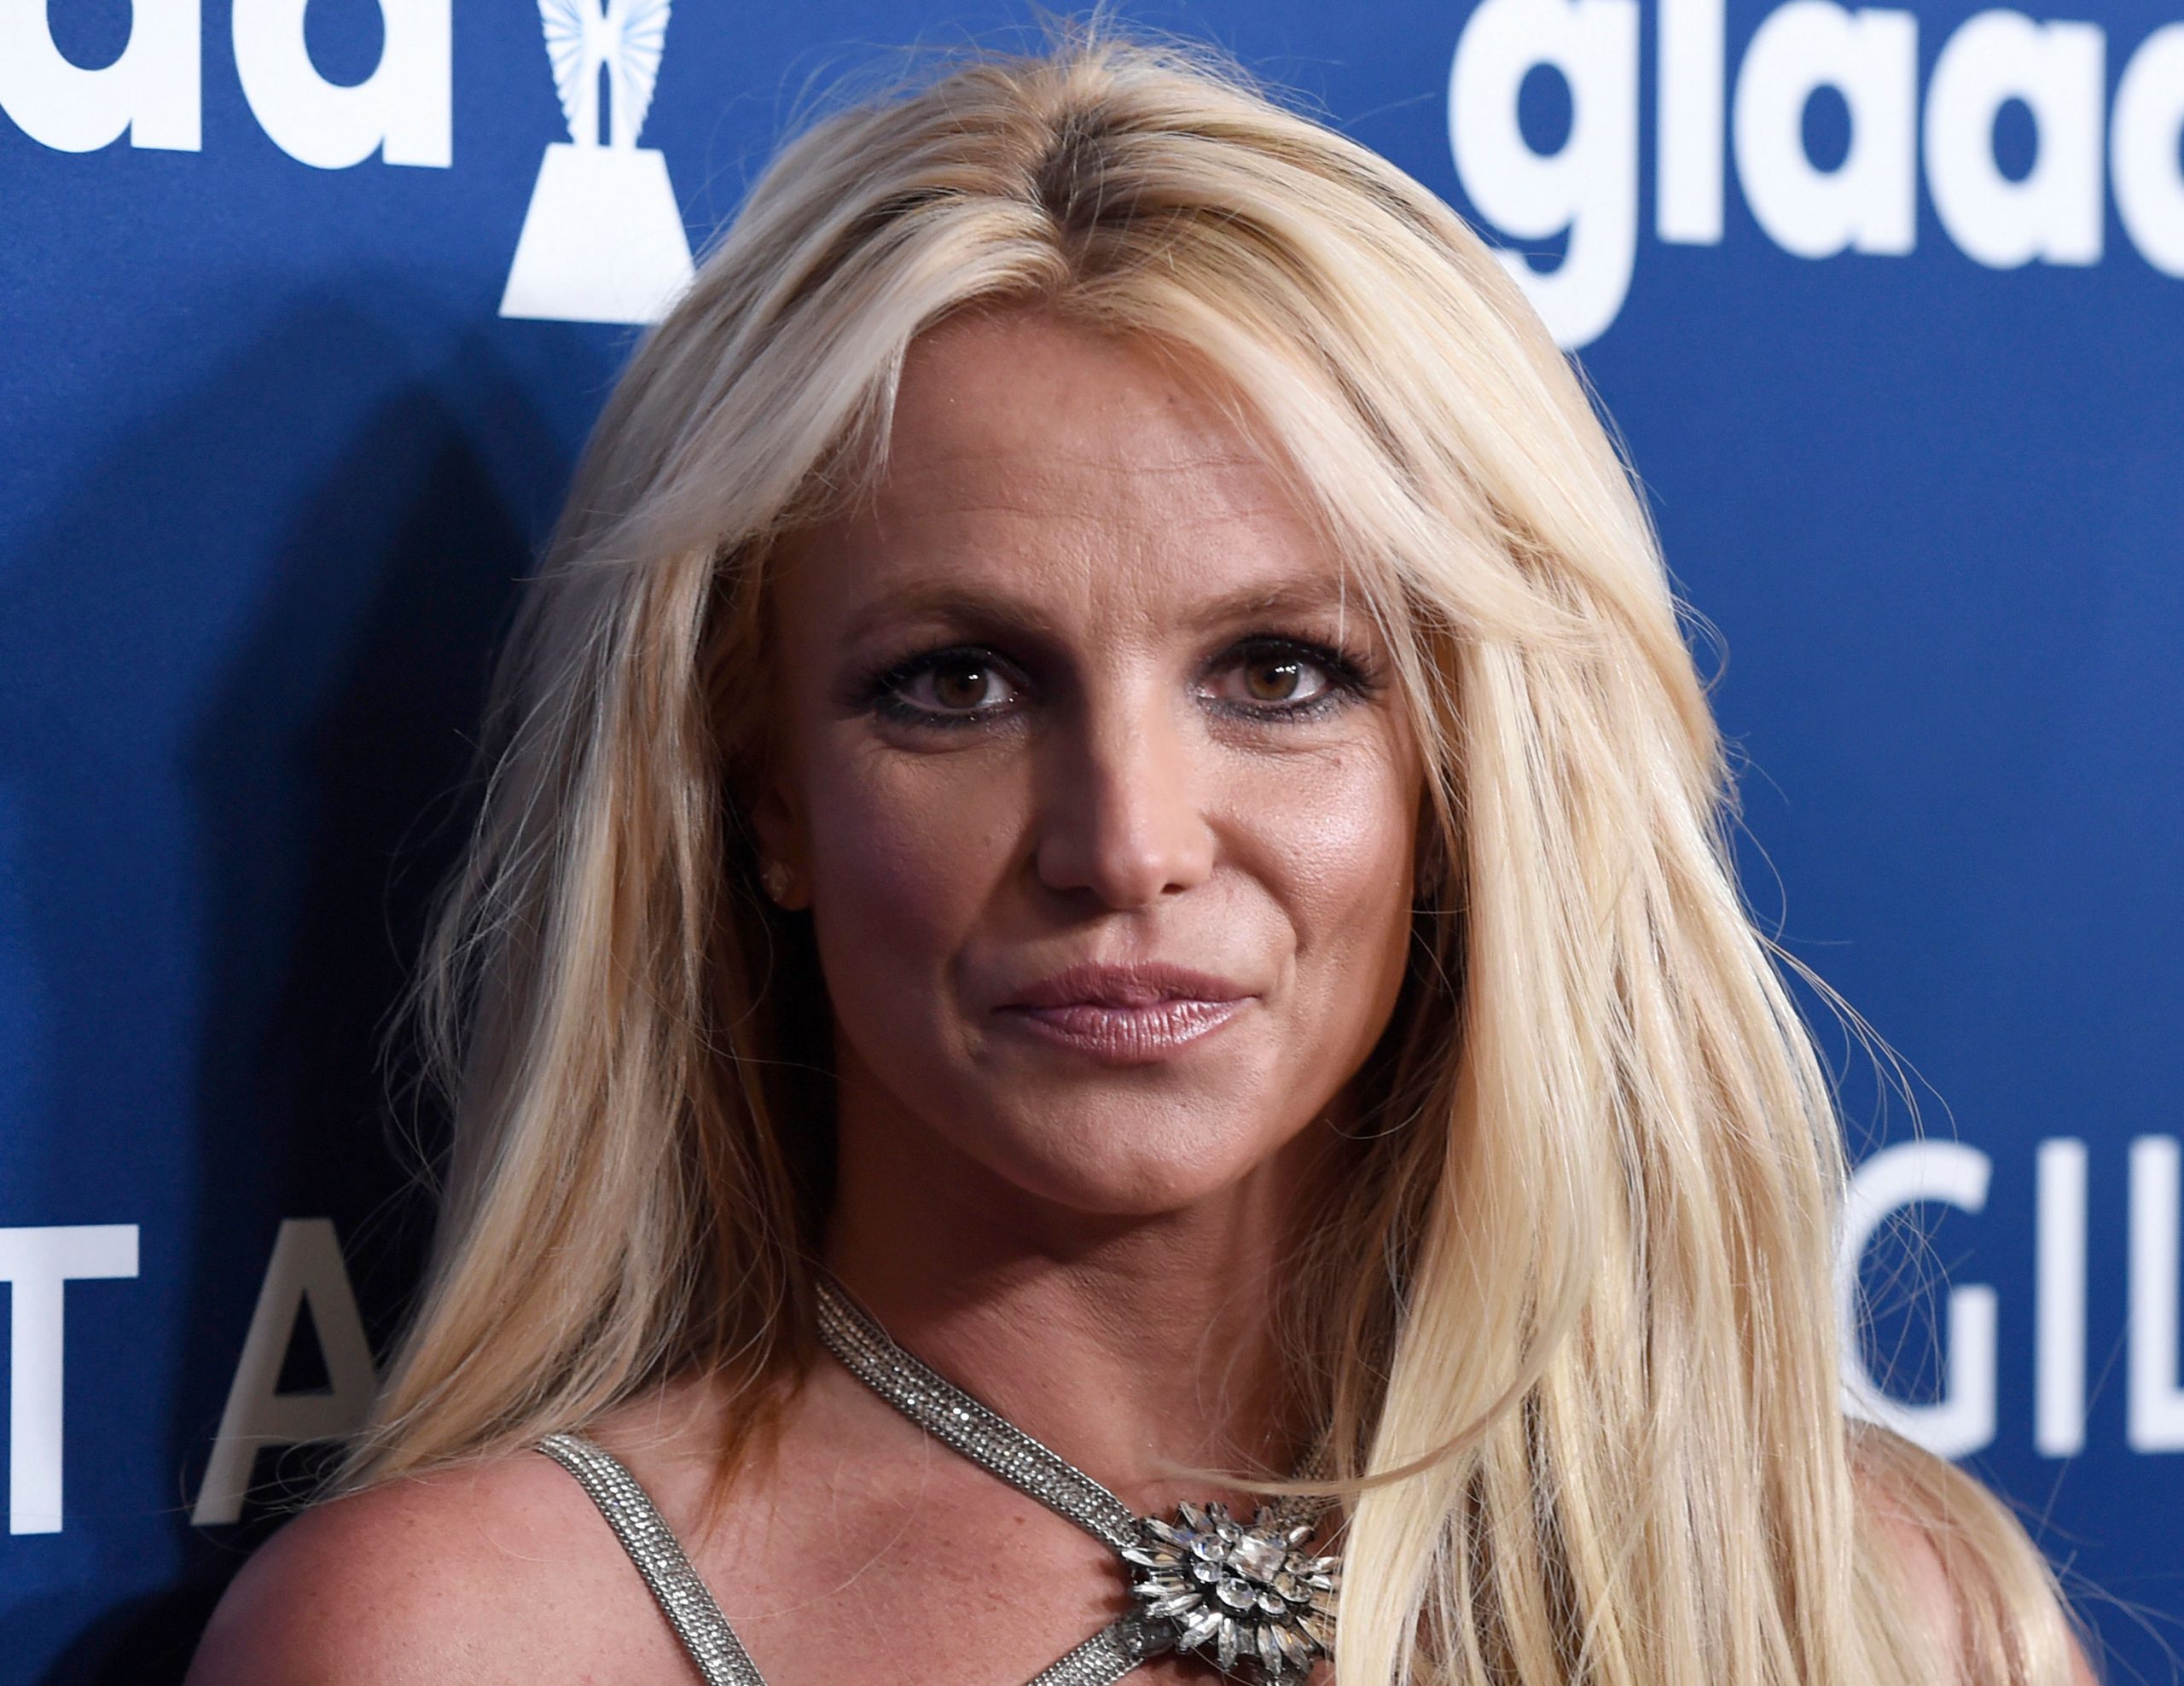 Singer Britney Spears deletes Instagram, sends fans into a tizzy